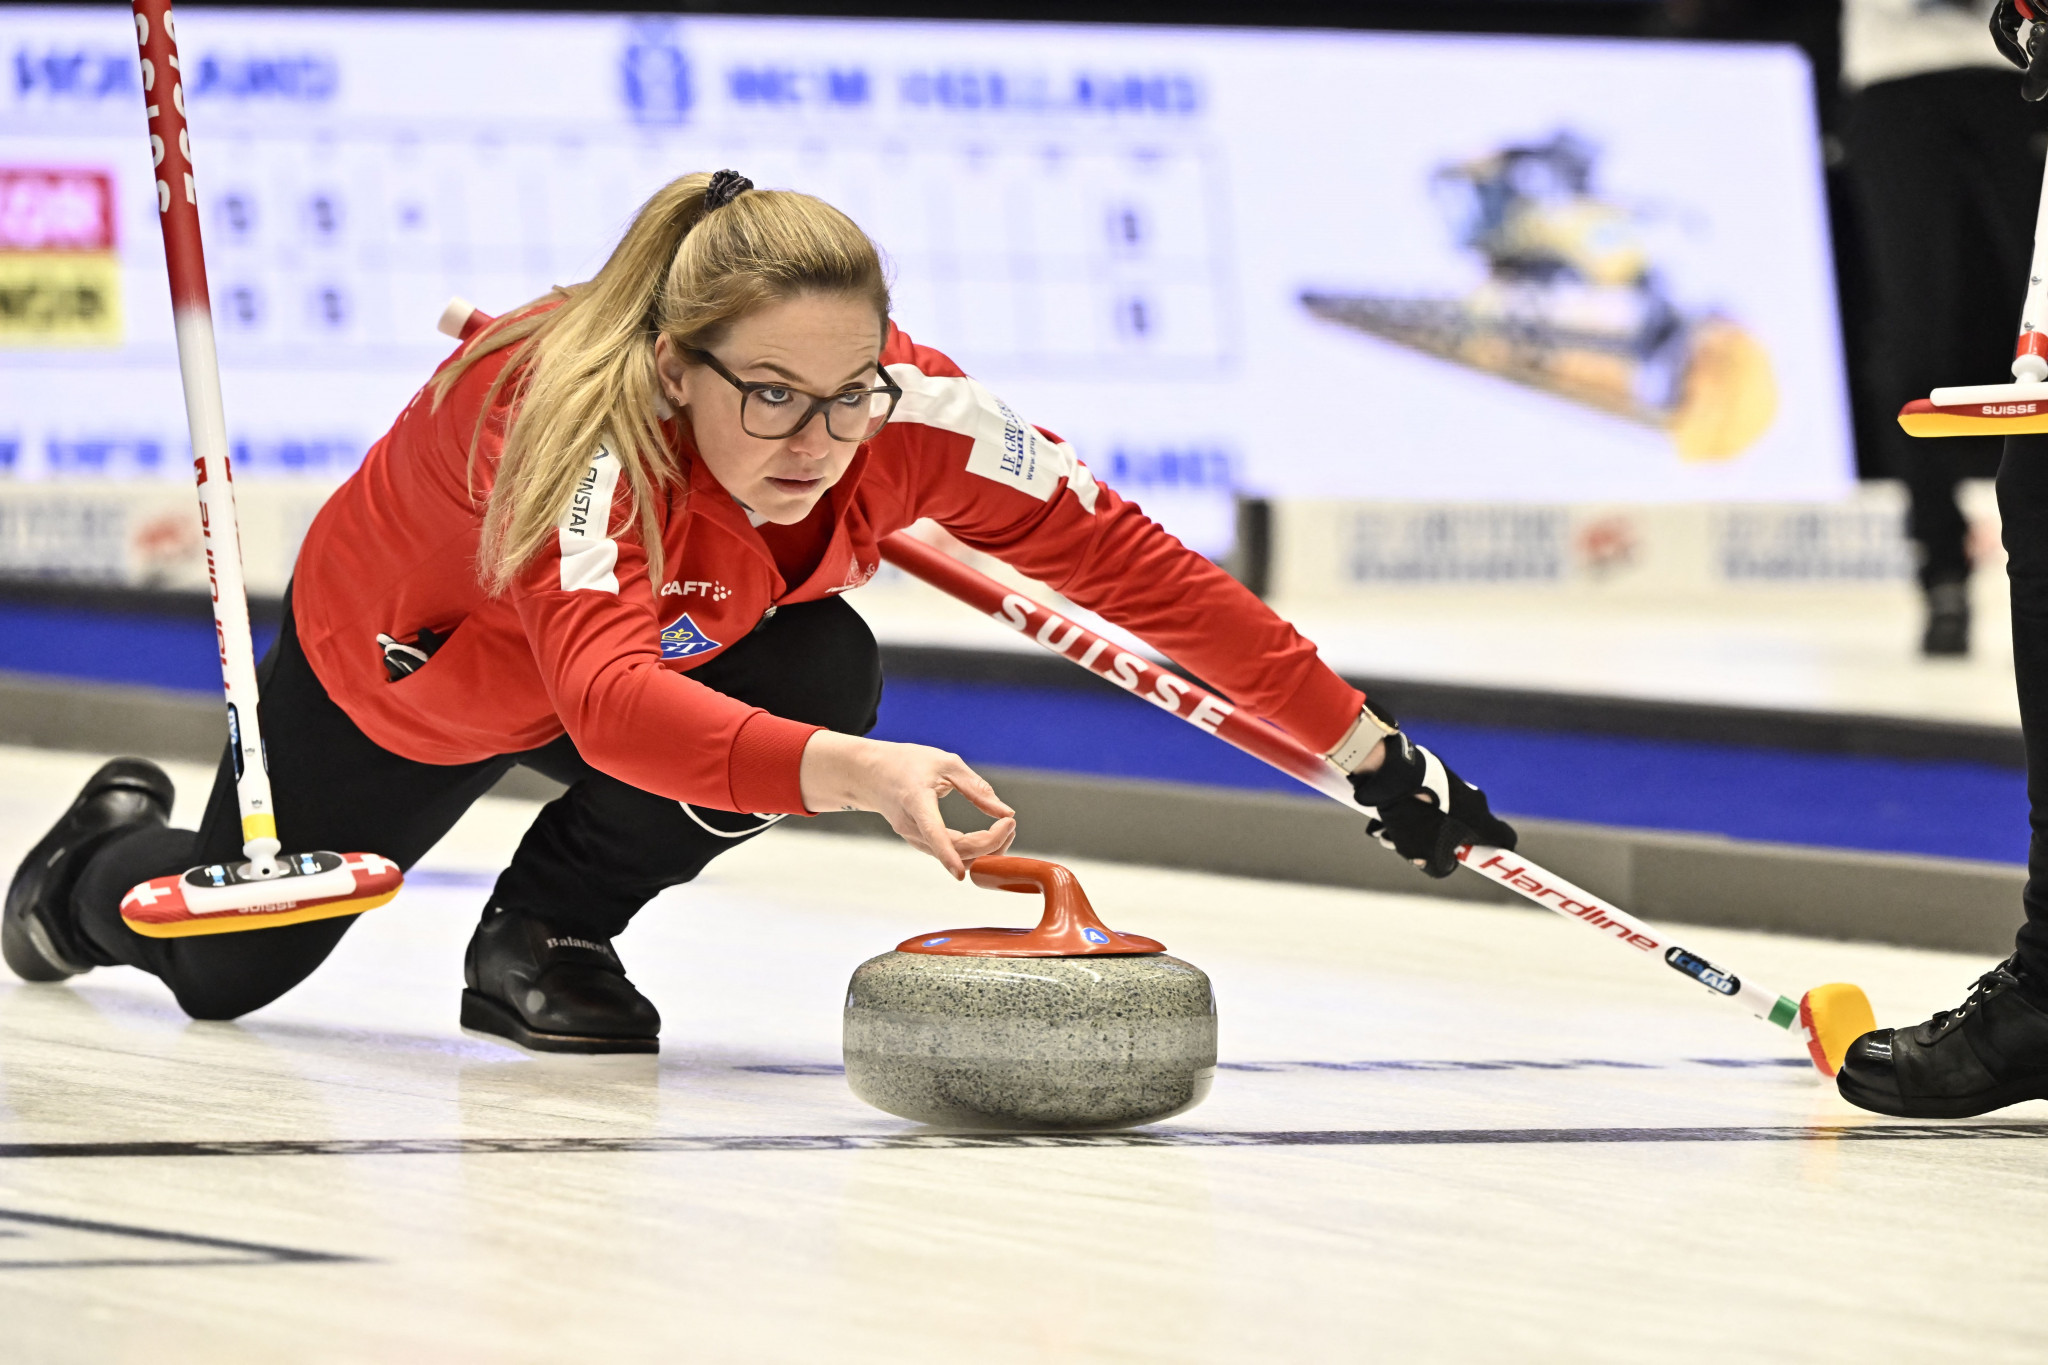 Switzerland win sixth straight match on day four of World Women’s Curling Championship